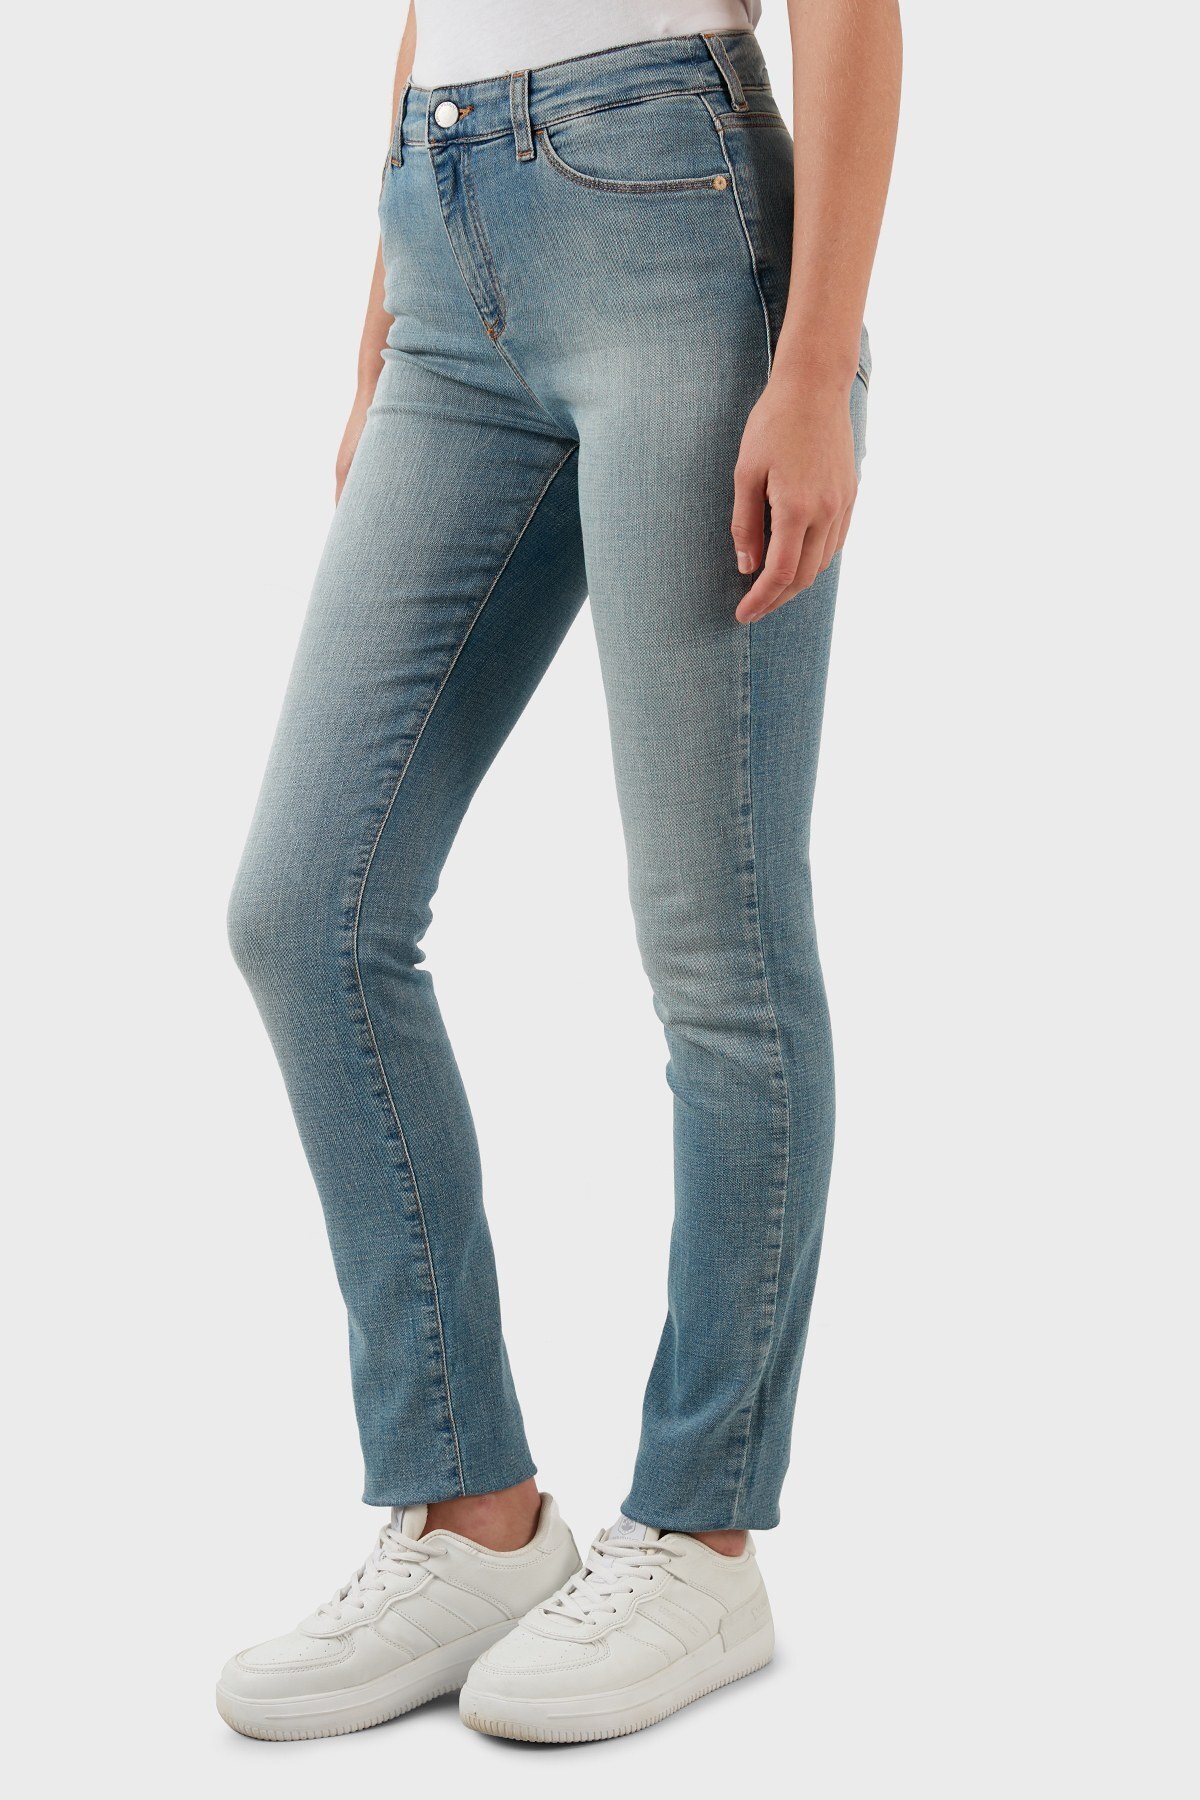 Emporio Armani Pamuklu Yüksek Bel Slim Fit Jeans Bayan Kot Pantolon 3L2J18 2DQ0Z 0941 MAVİ